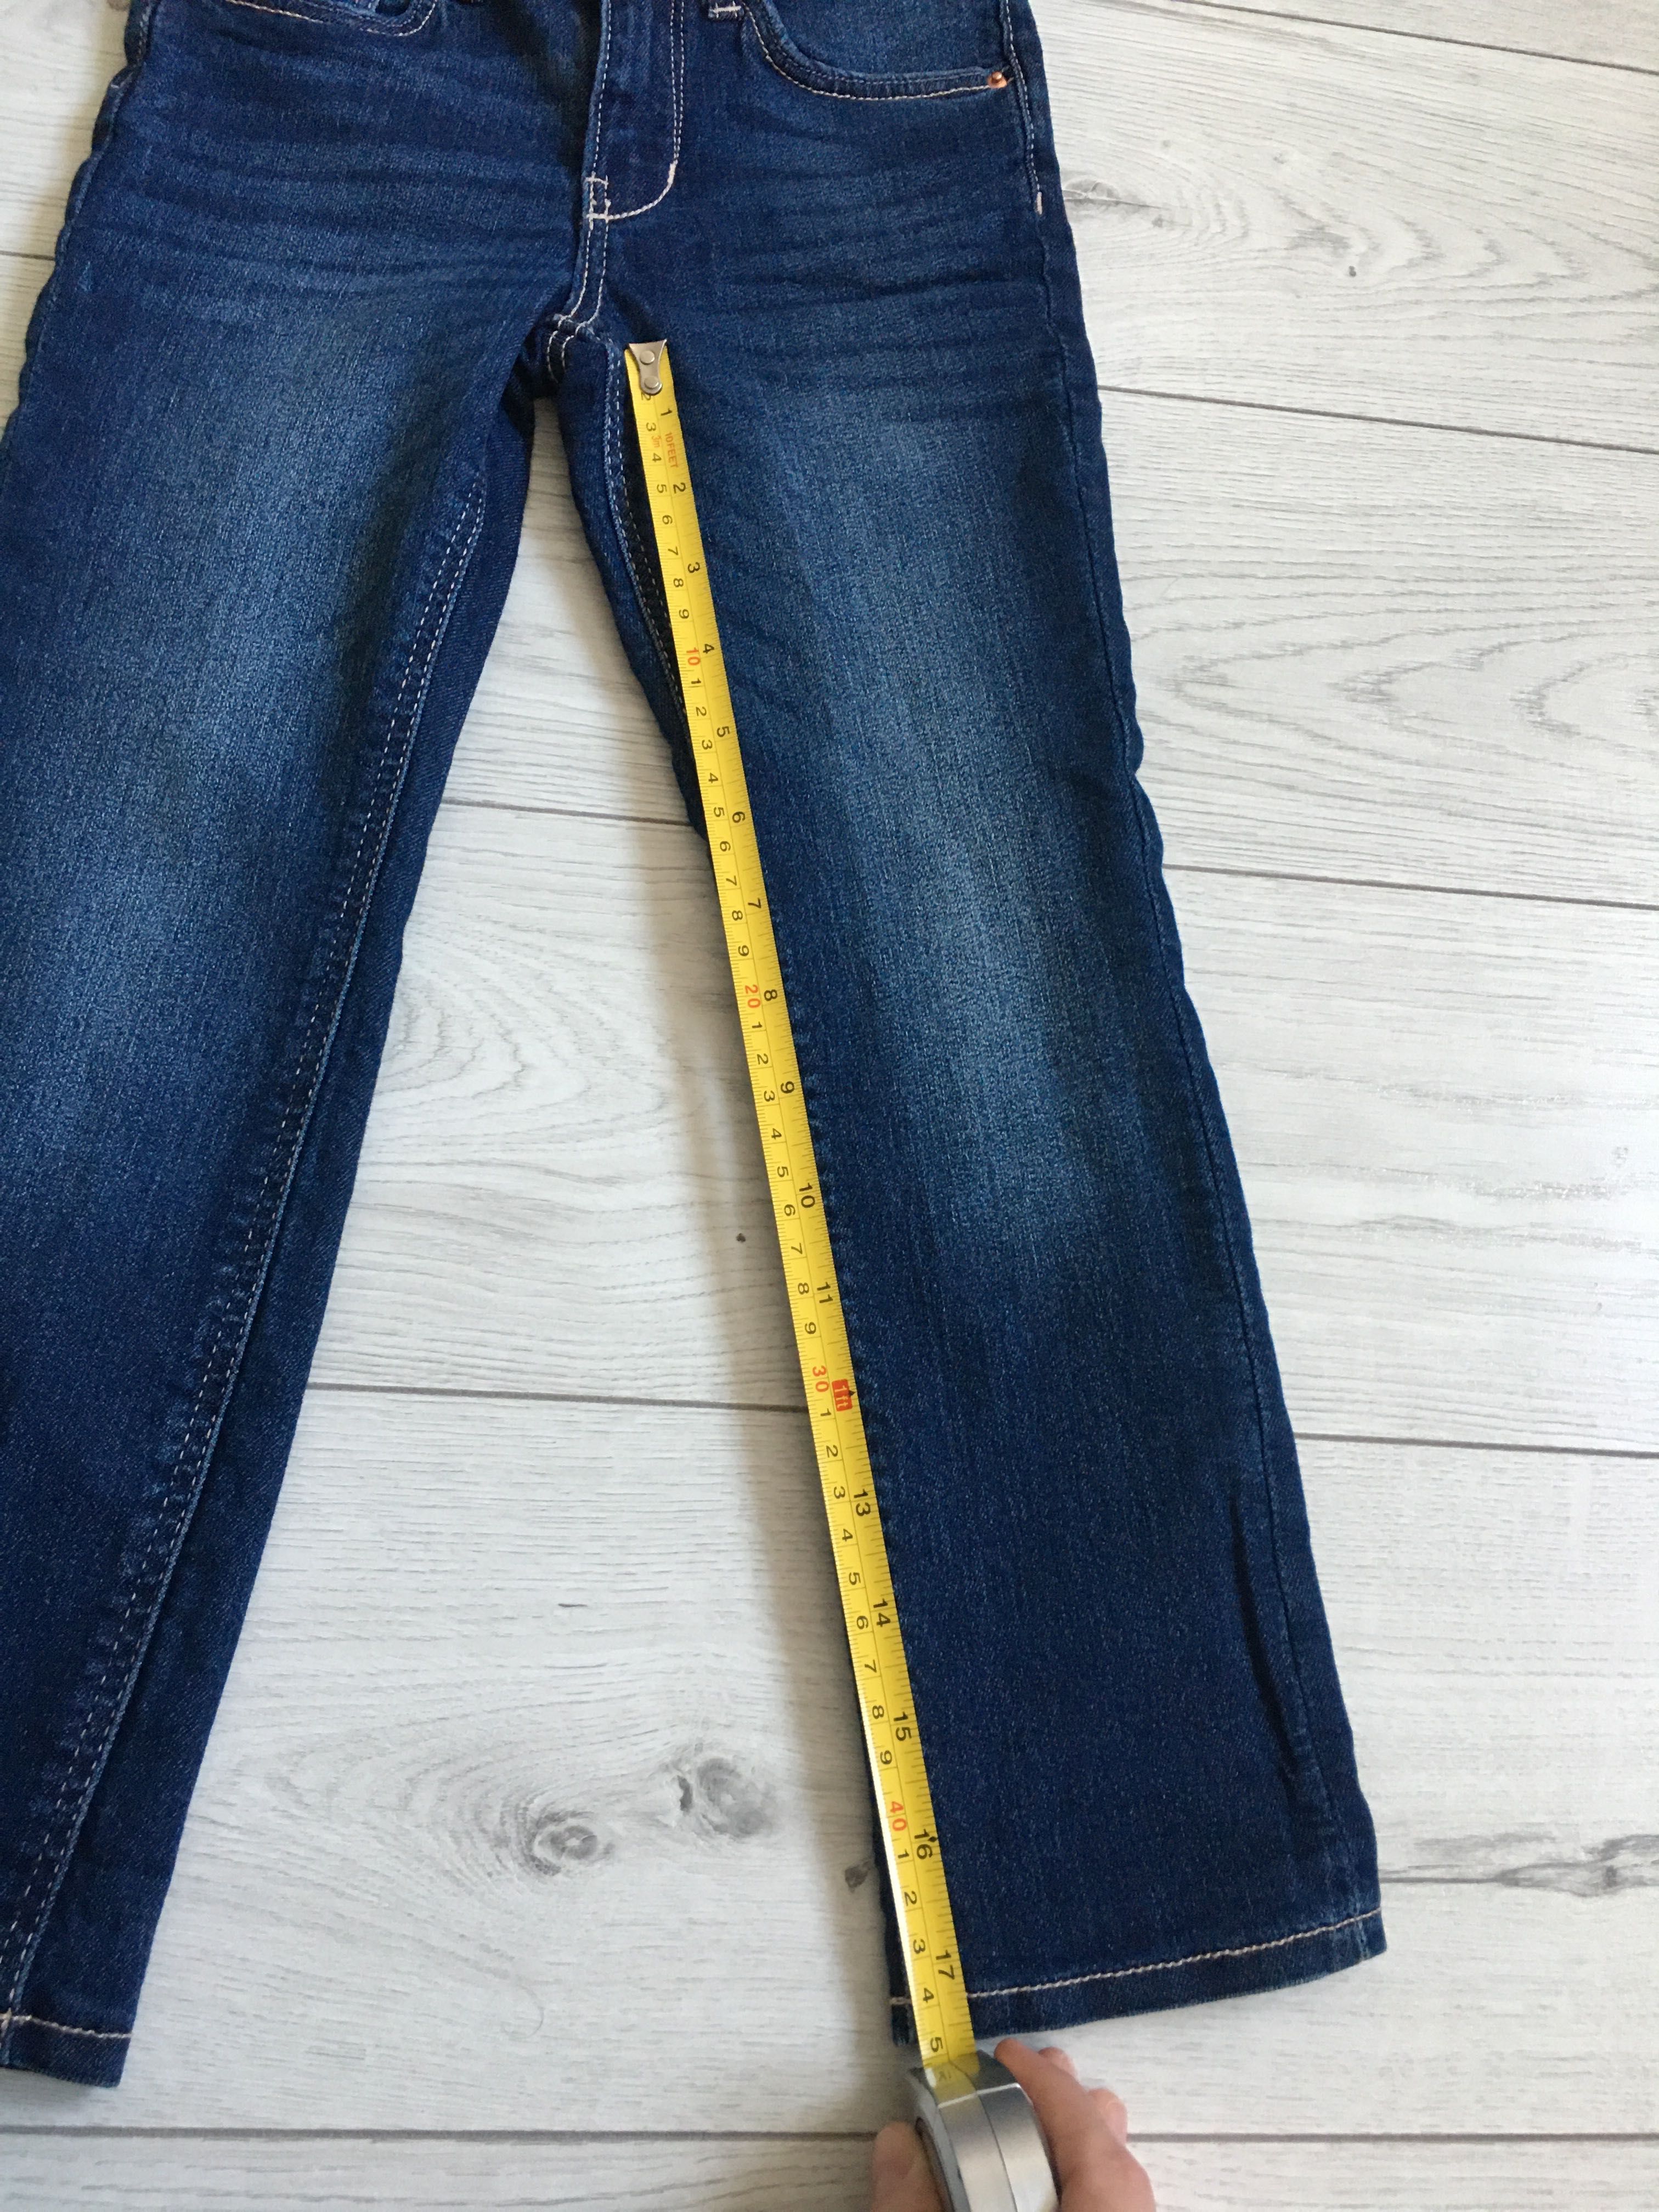 Dżinsy jeansy slim fit lined jeans H&M r. 110, nowe bez metki